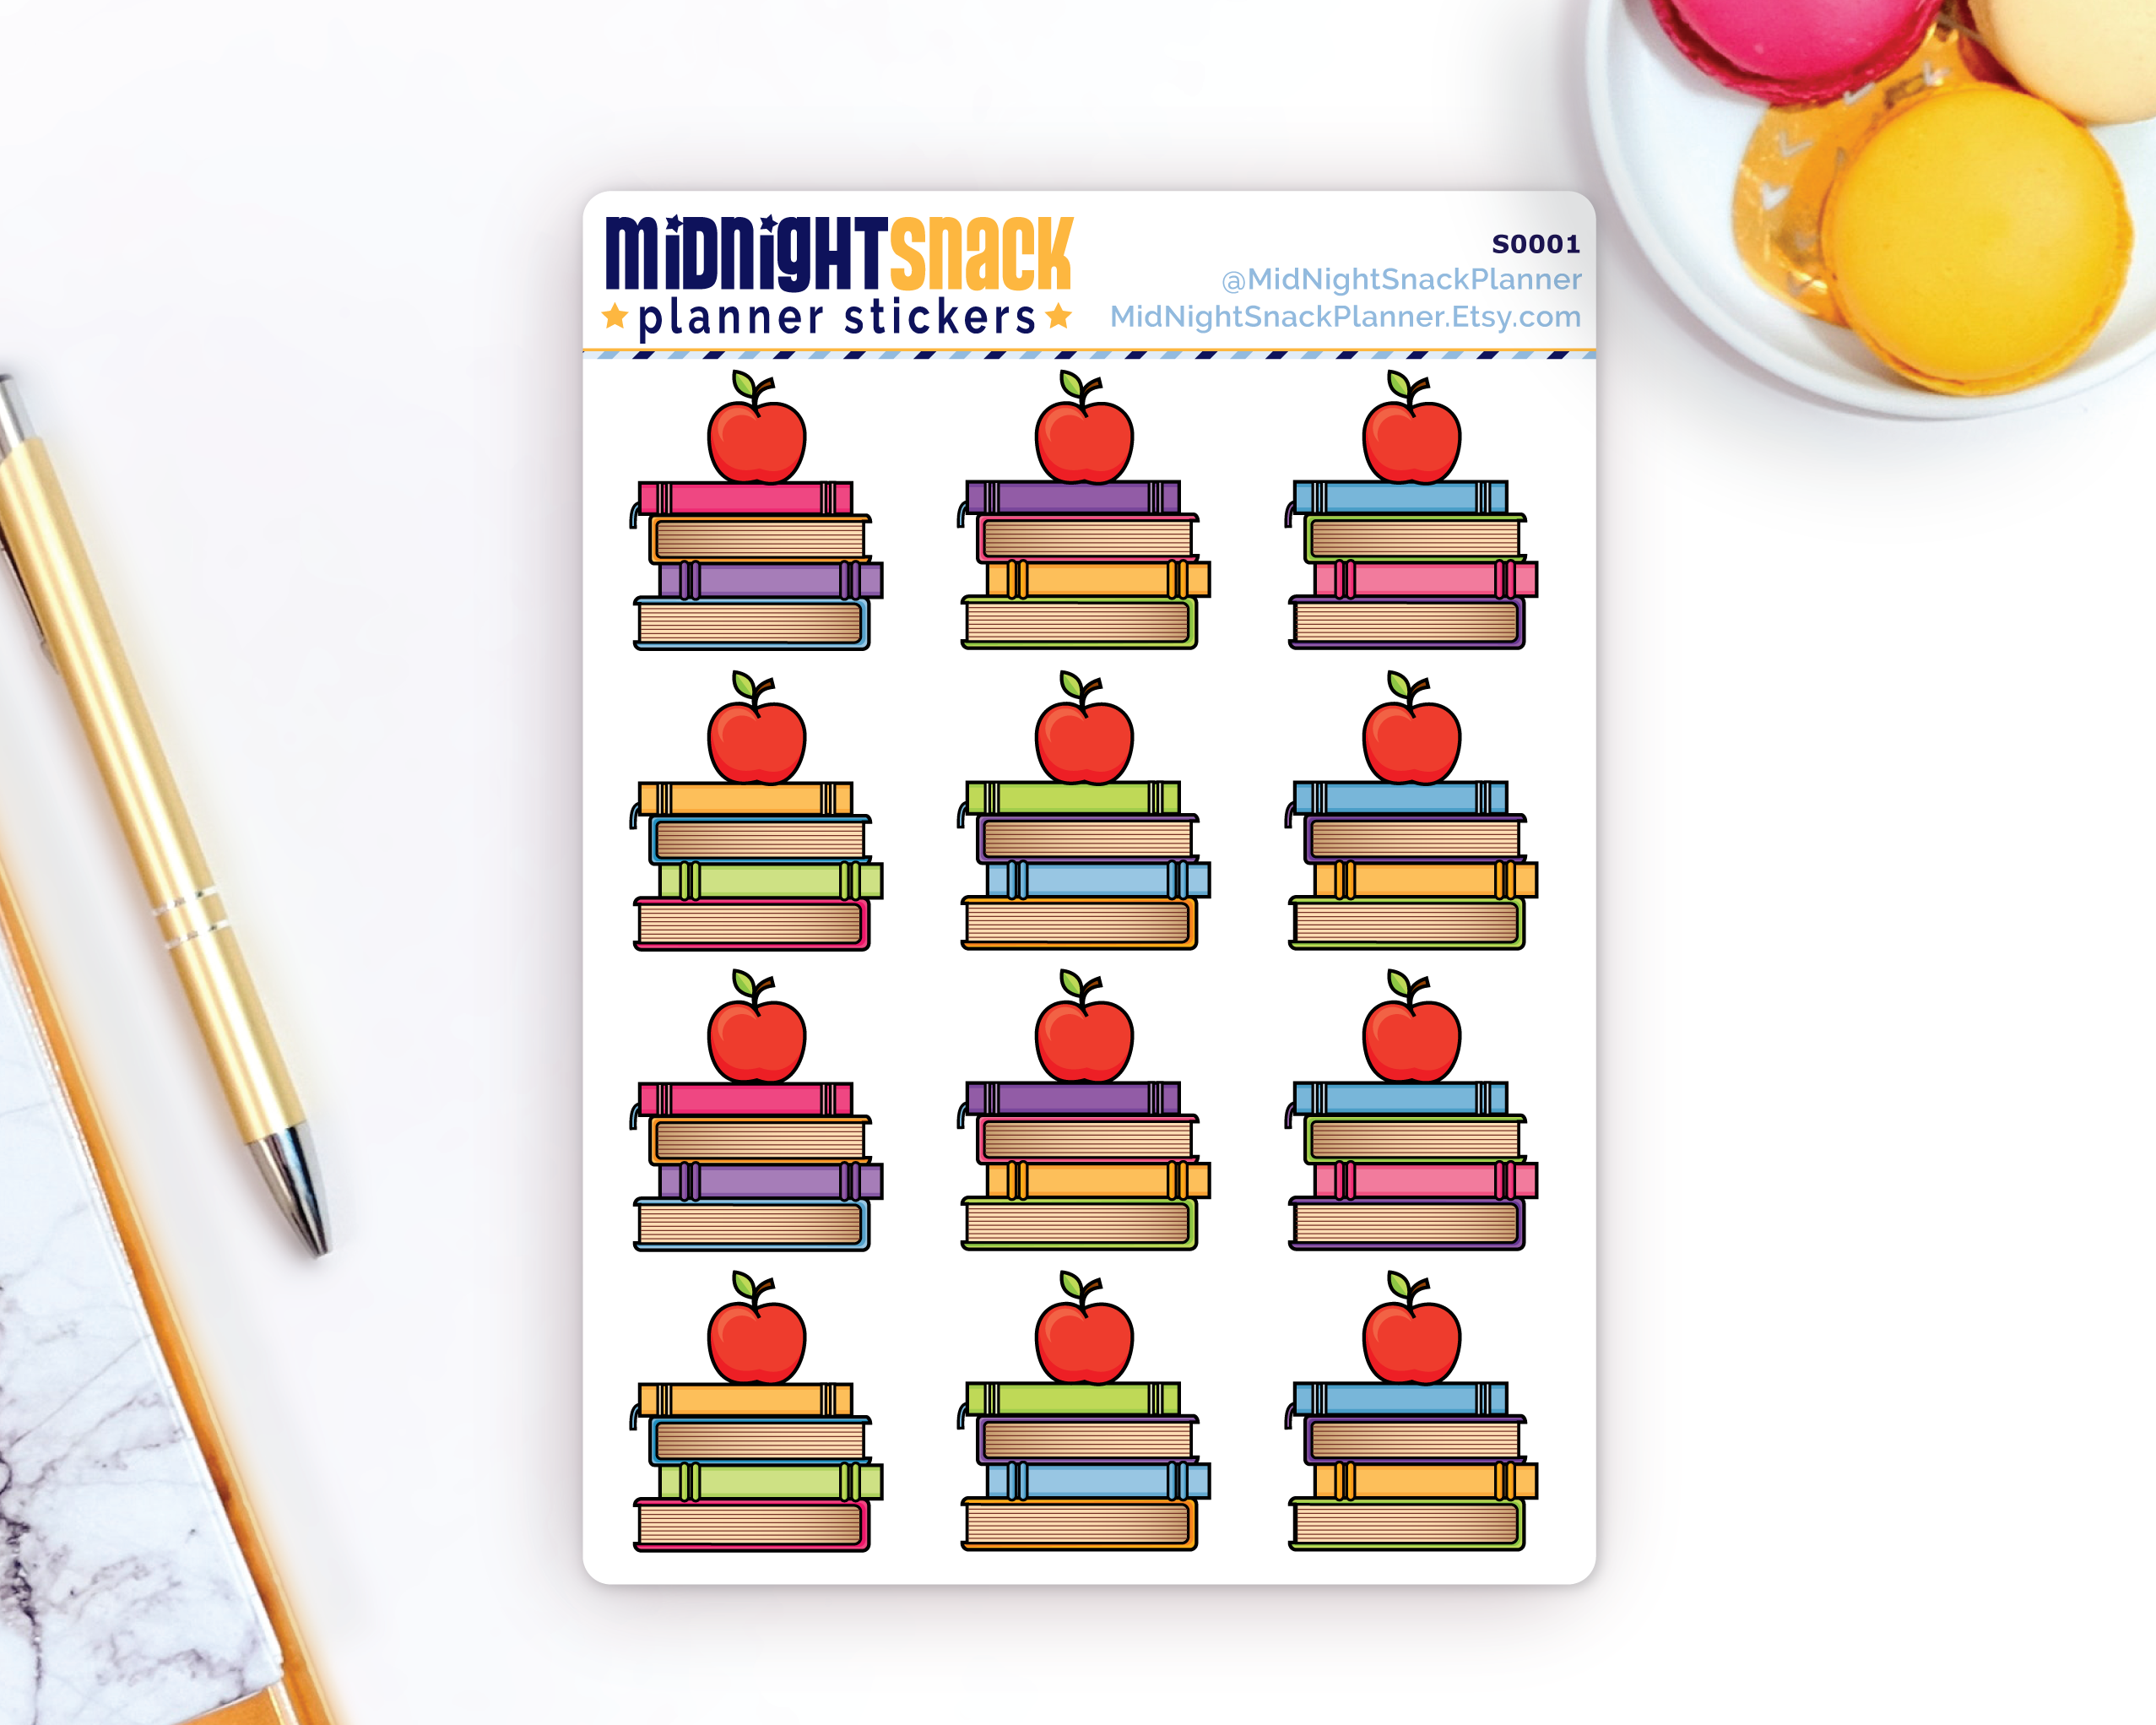 Homework Icon: Back to School Planner Stickers Midnight Snack Planner